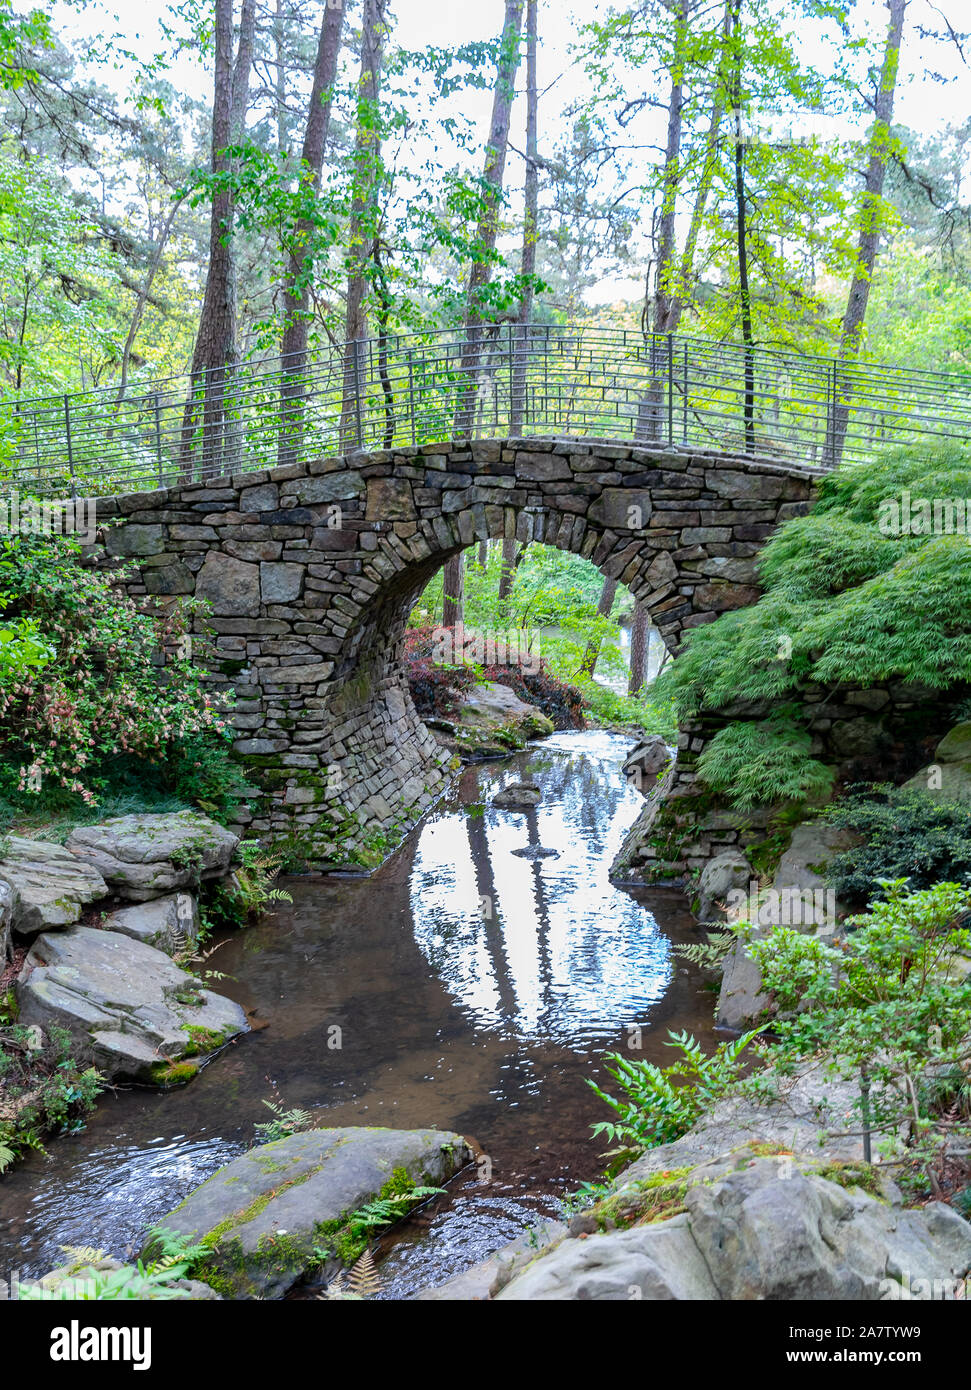 Scenic view of a stone bridge in the Ozark Mountains in Arkansas Stock Photo